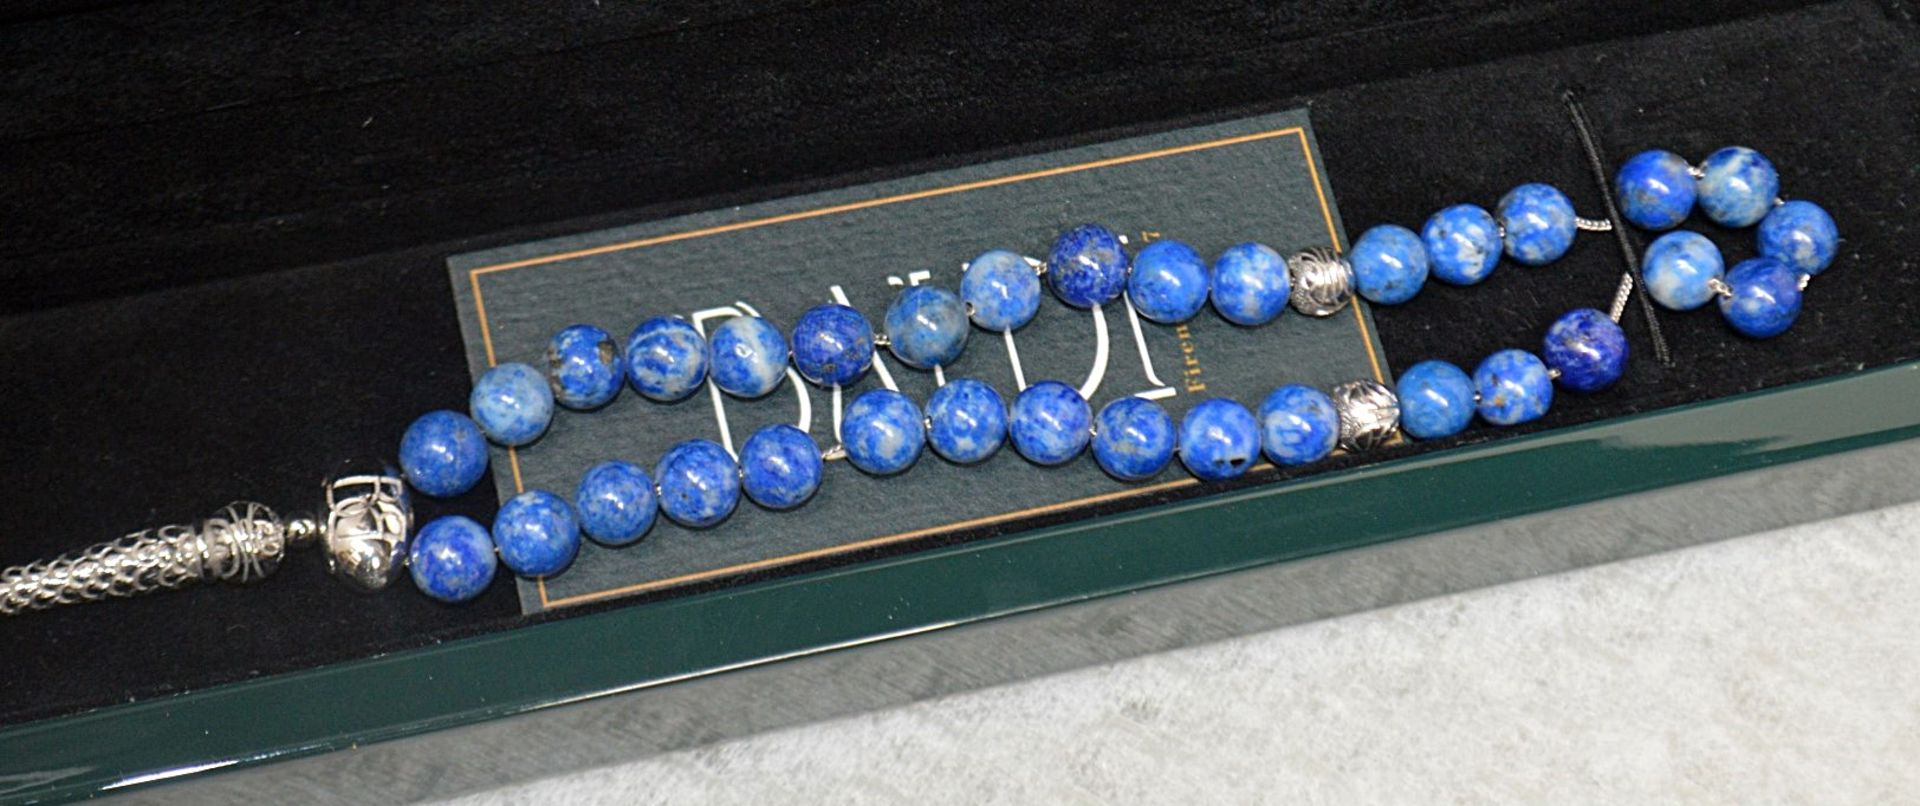 1 x BALDI 'Home Jewels' Italian Hand-crafted Artisan MISBAHA Prayer Beads **Original RRP £735.00** - Image 5 of 6